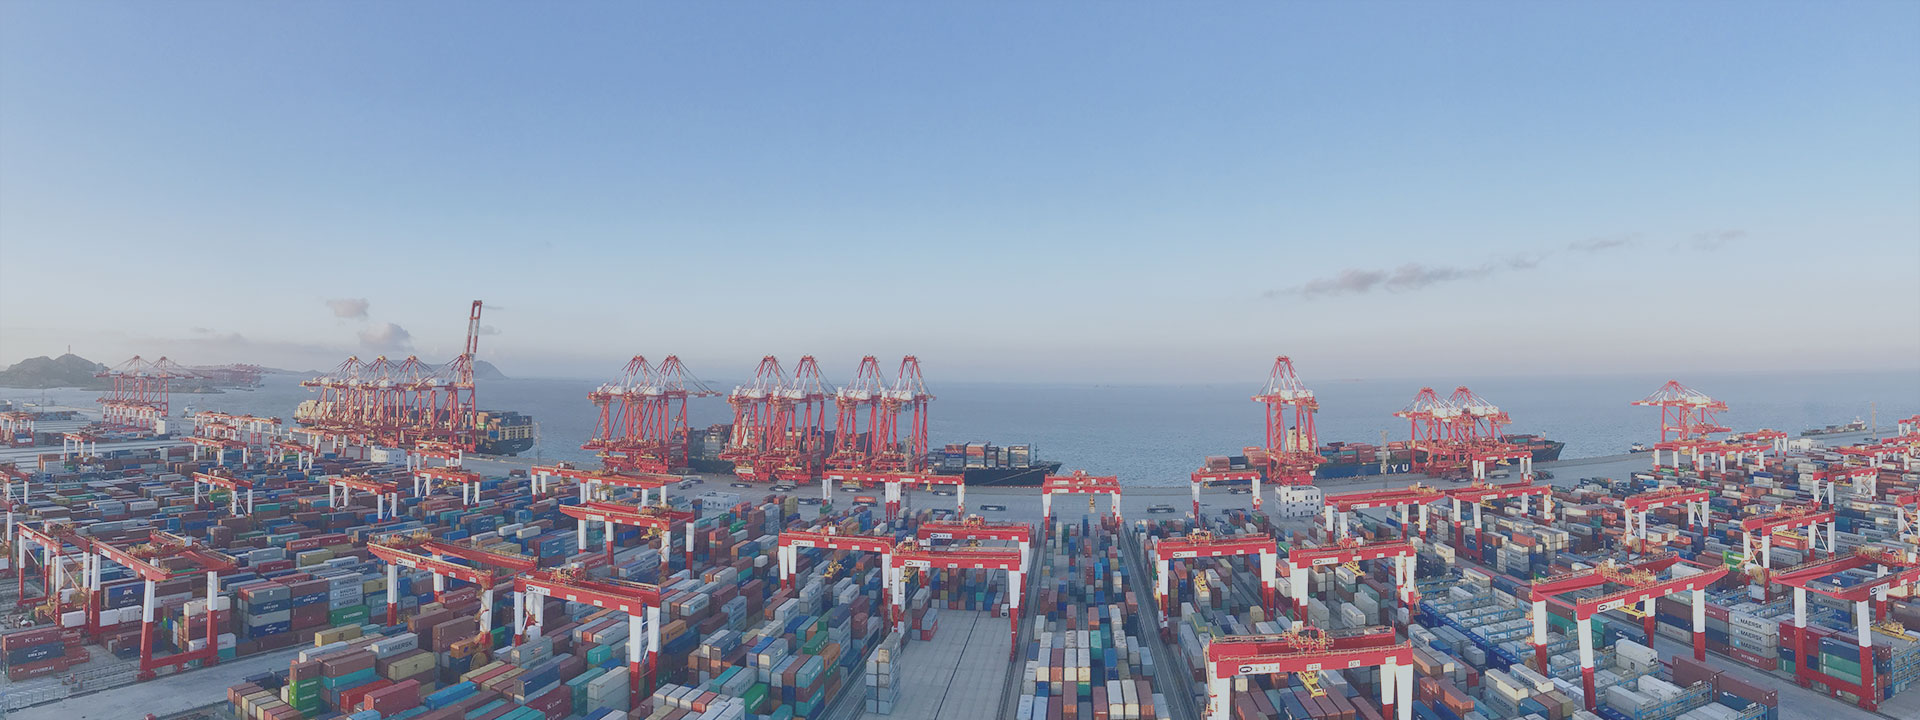 Shanghai Port Congestion Weekly Update